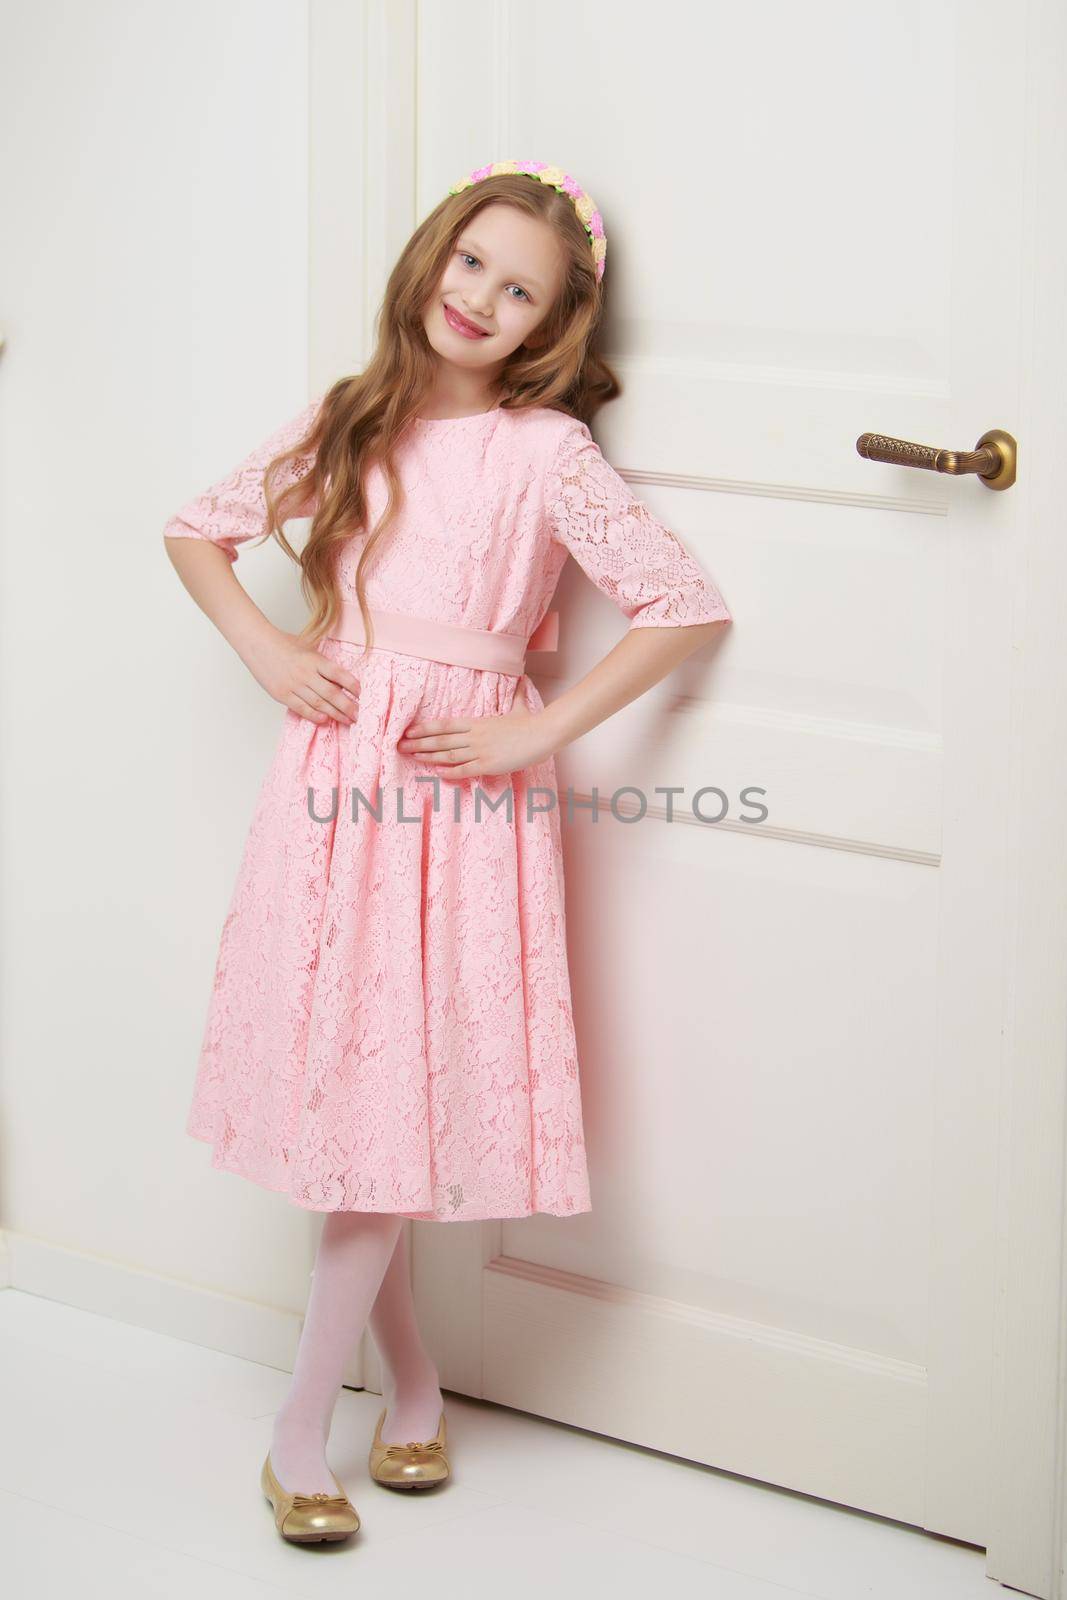 A little girl is standing by the door. by kolesnikov_studio